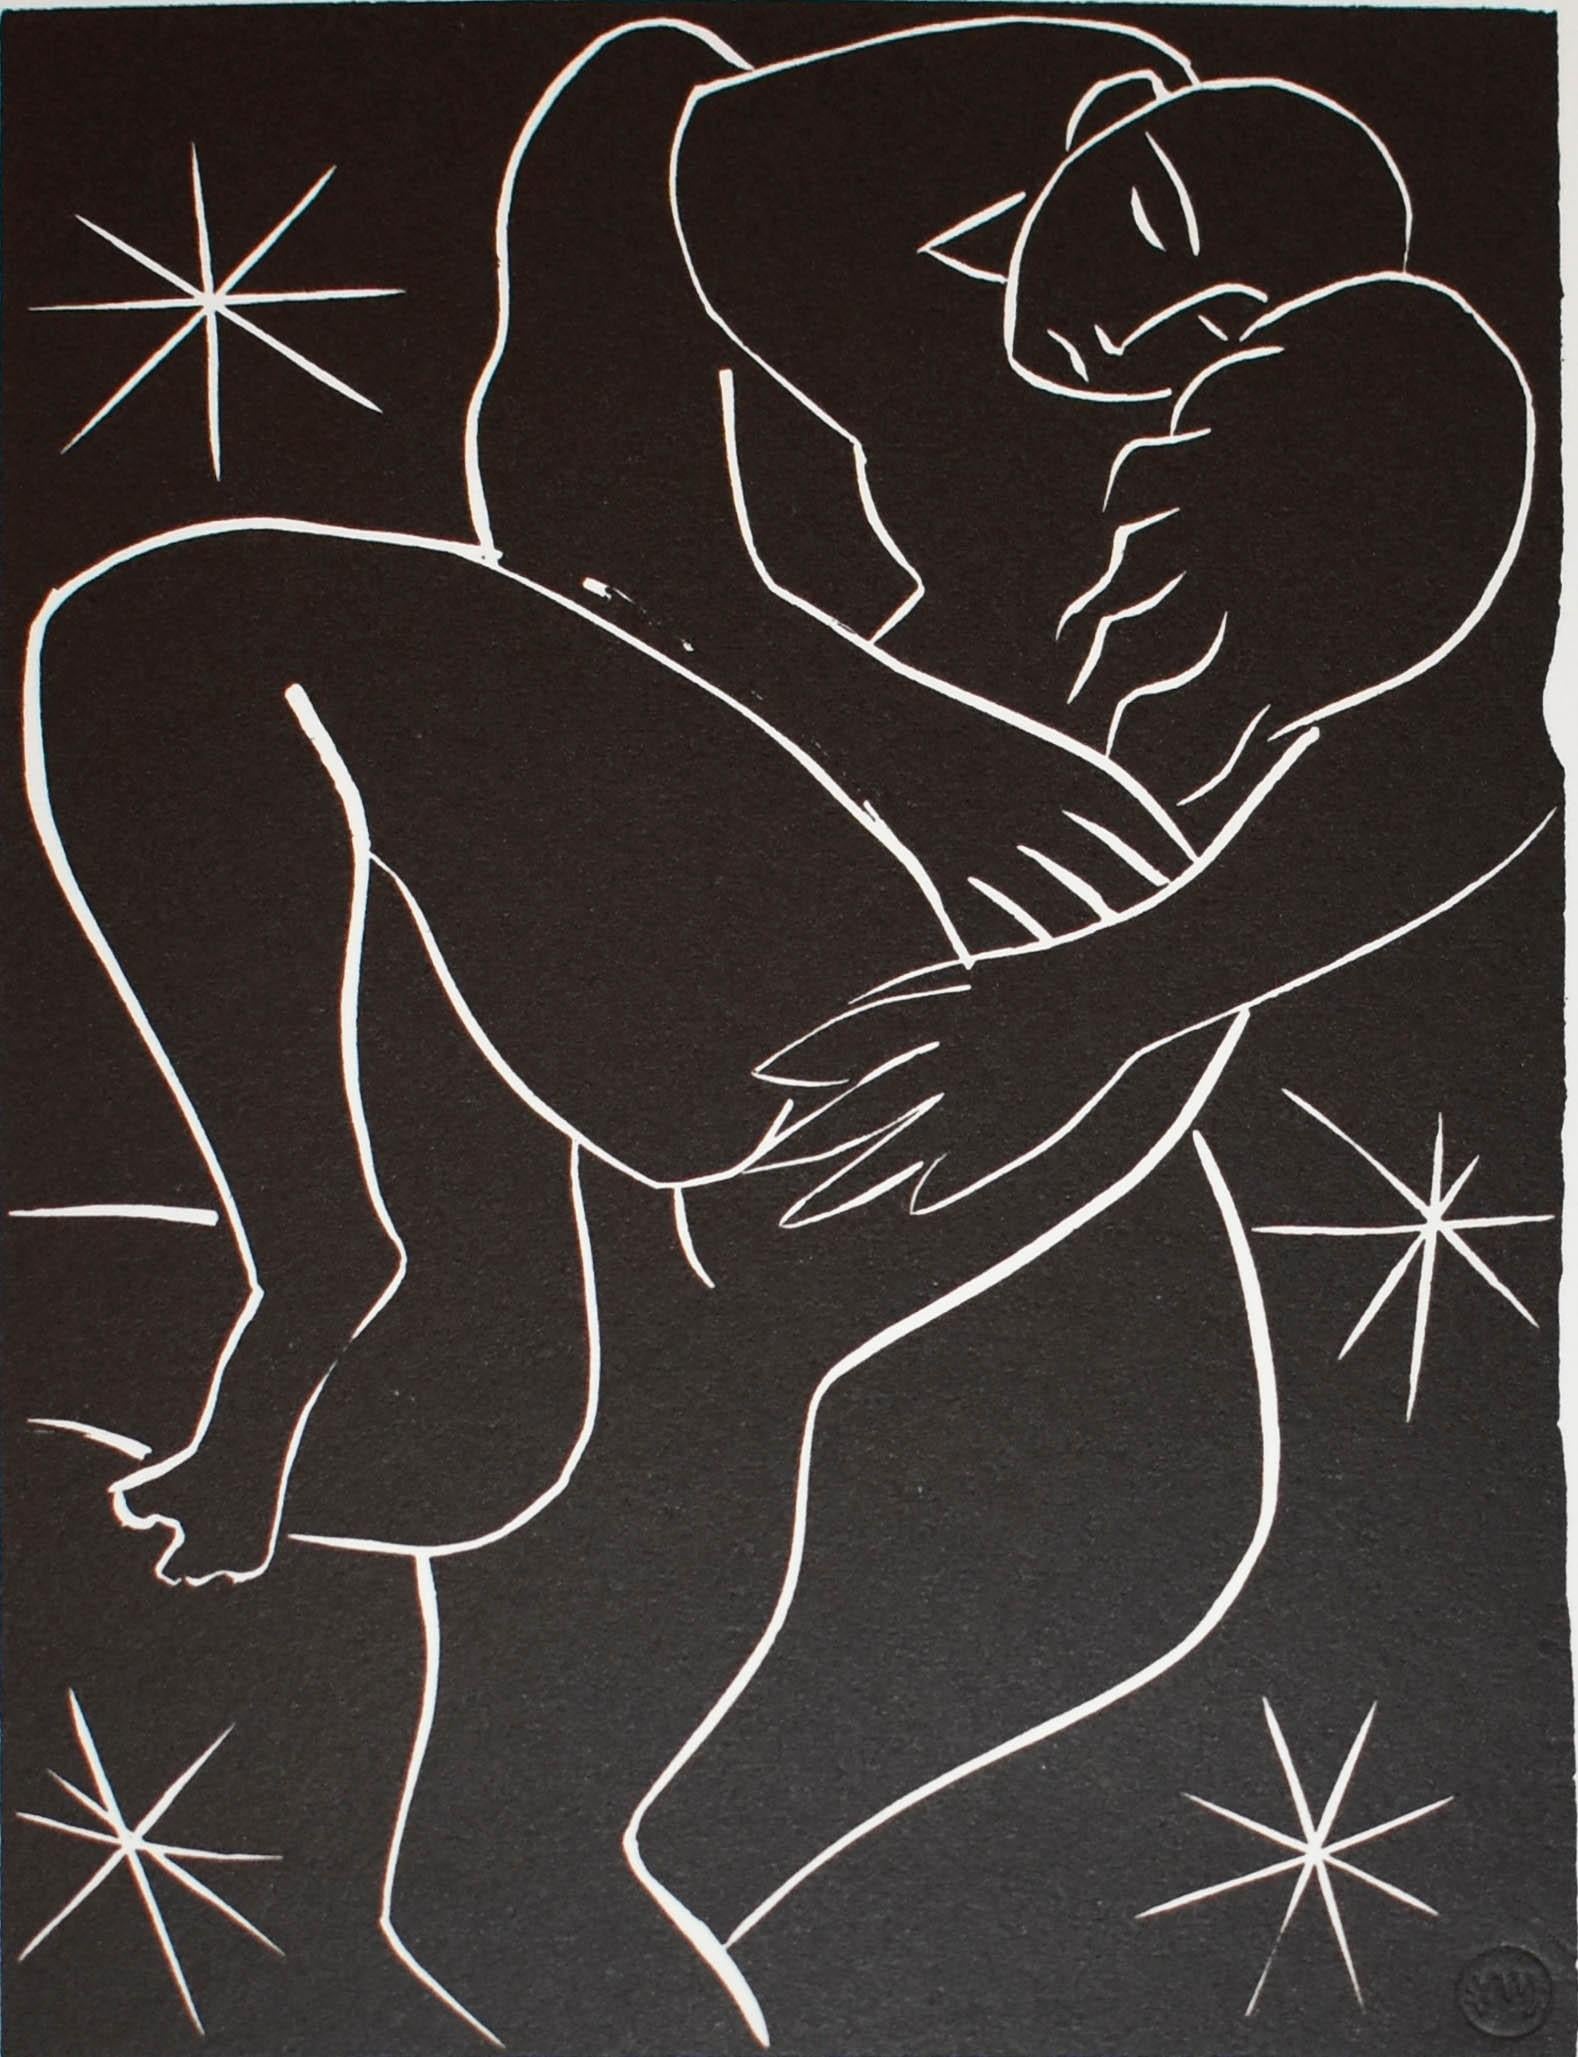 Pasiphae Plate 32 - Print by Henri Matisse